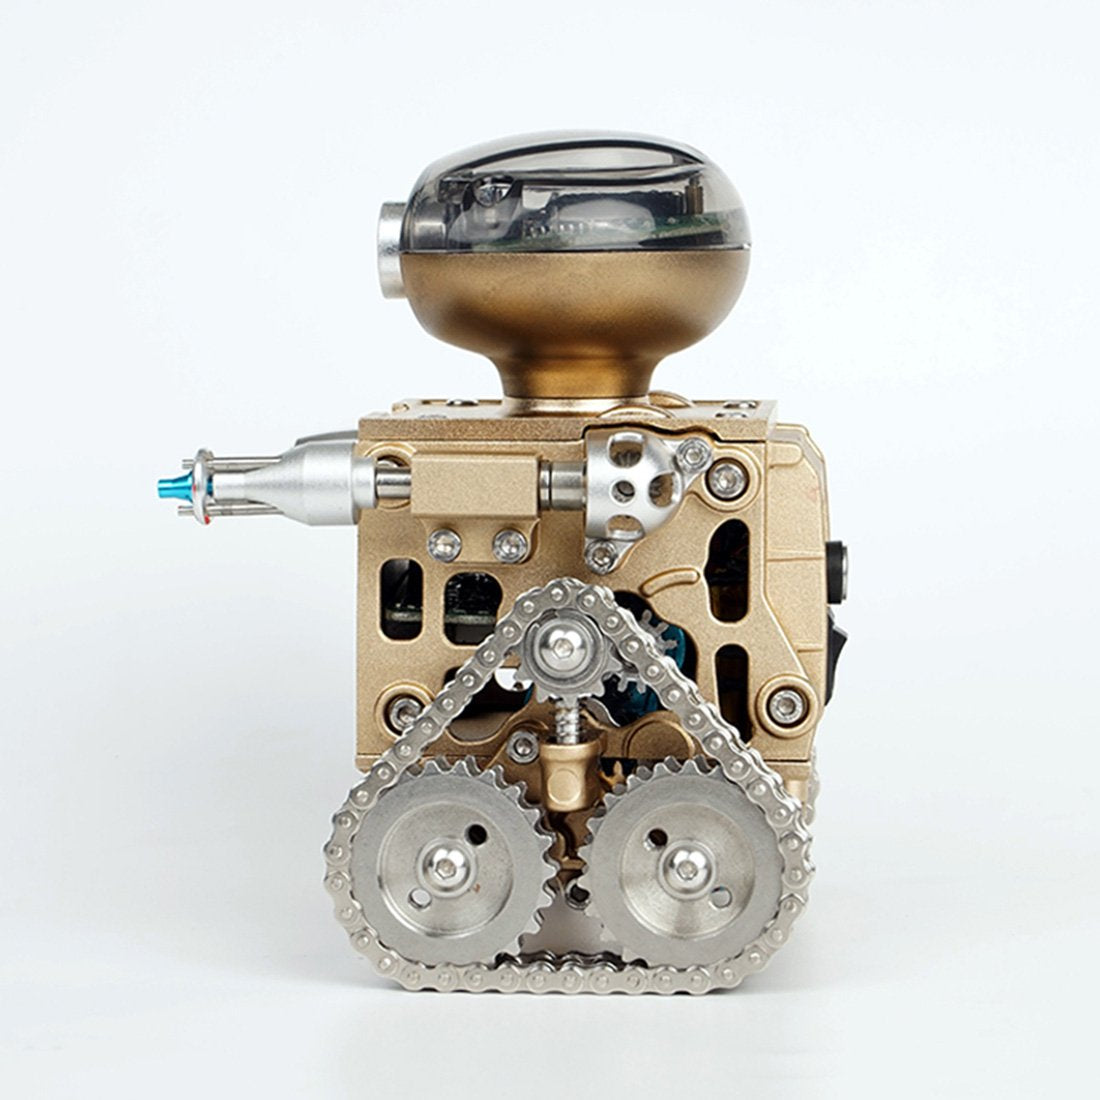 Assembling Metal App Smart Controlled Tank Robot Model Toy